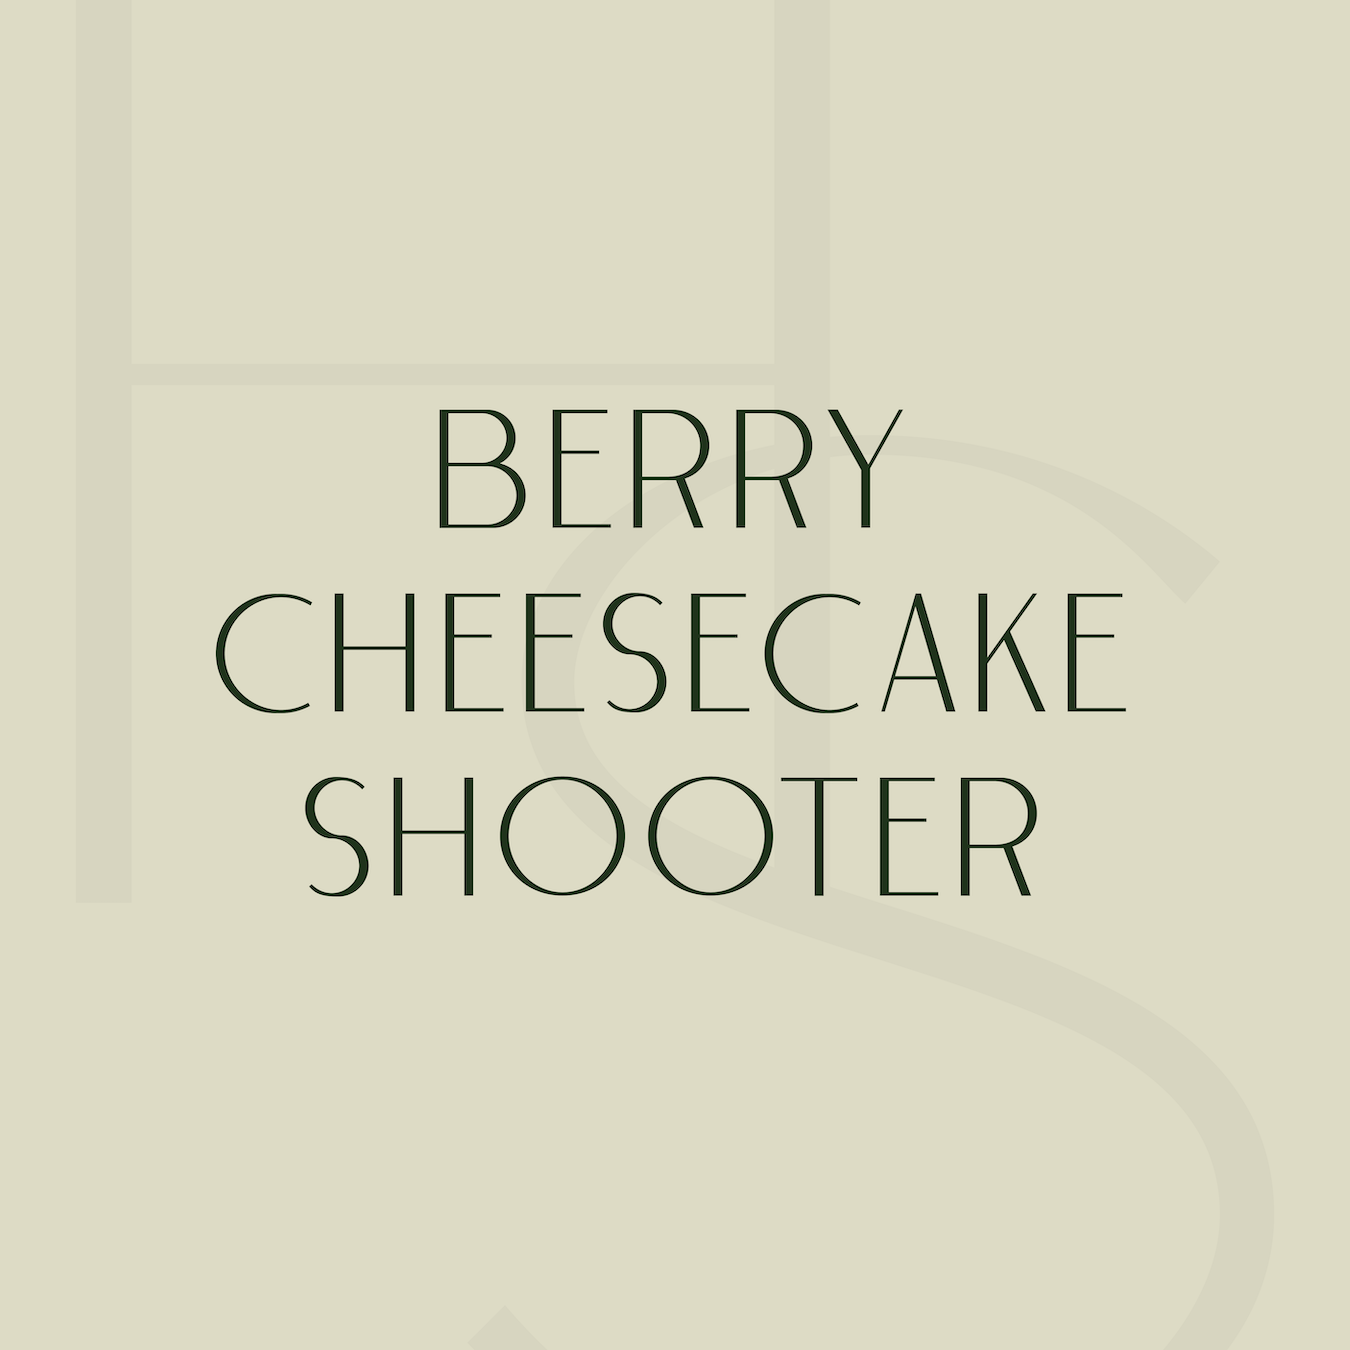 Berry Cheesecake Shooter